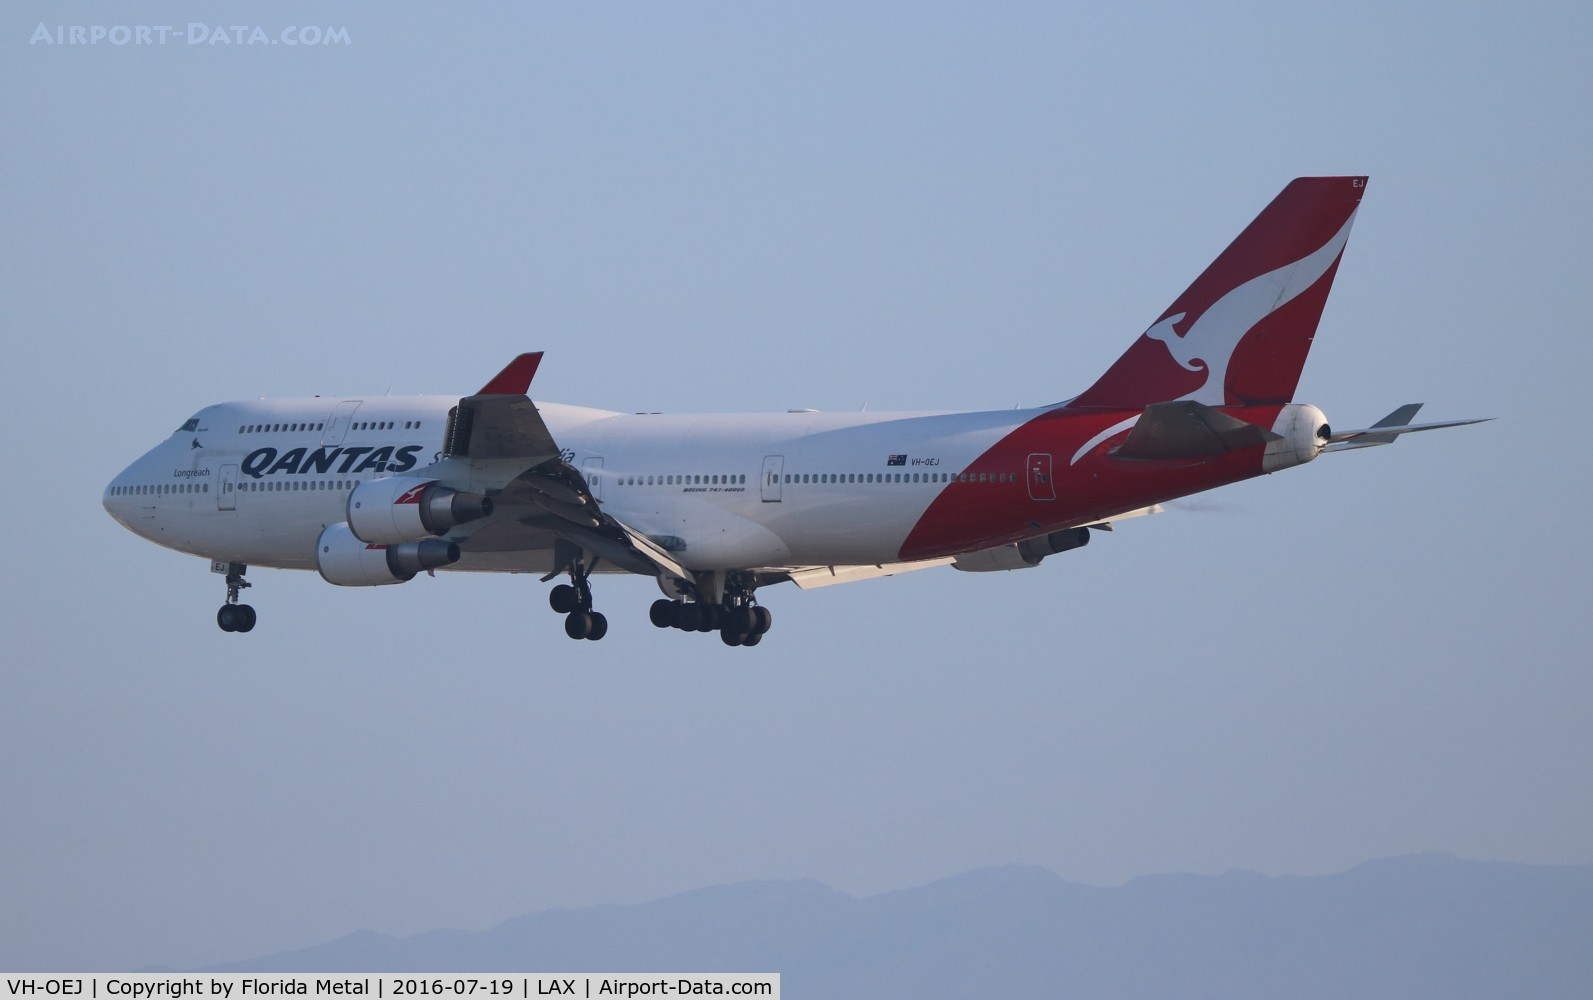 VH-OEJ, 2003 Boeing 747-438/ER C/N 32914, Qantas